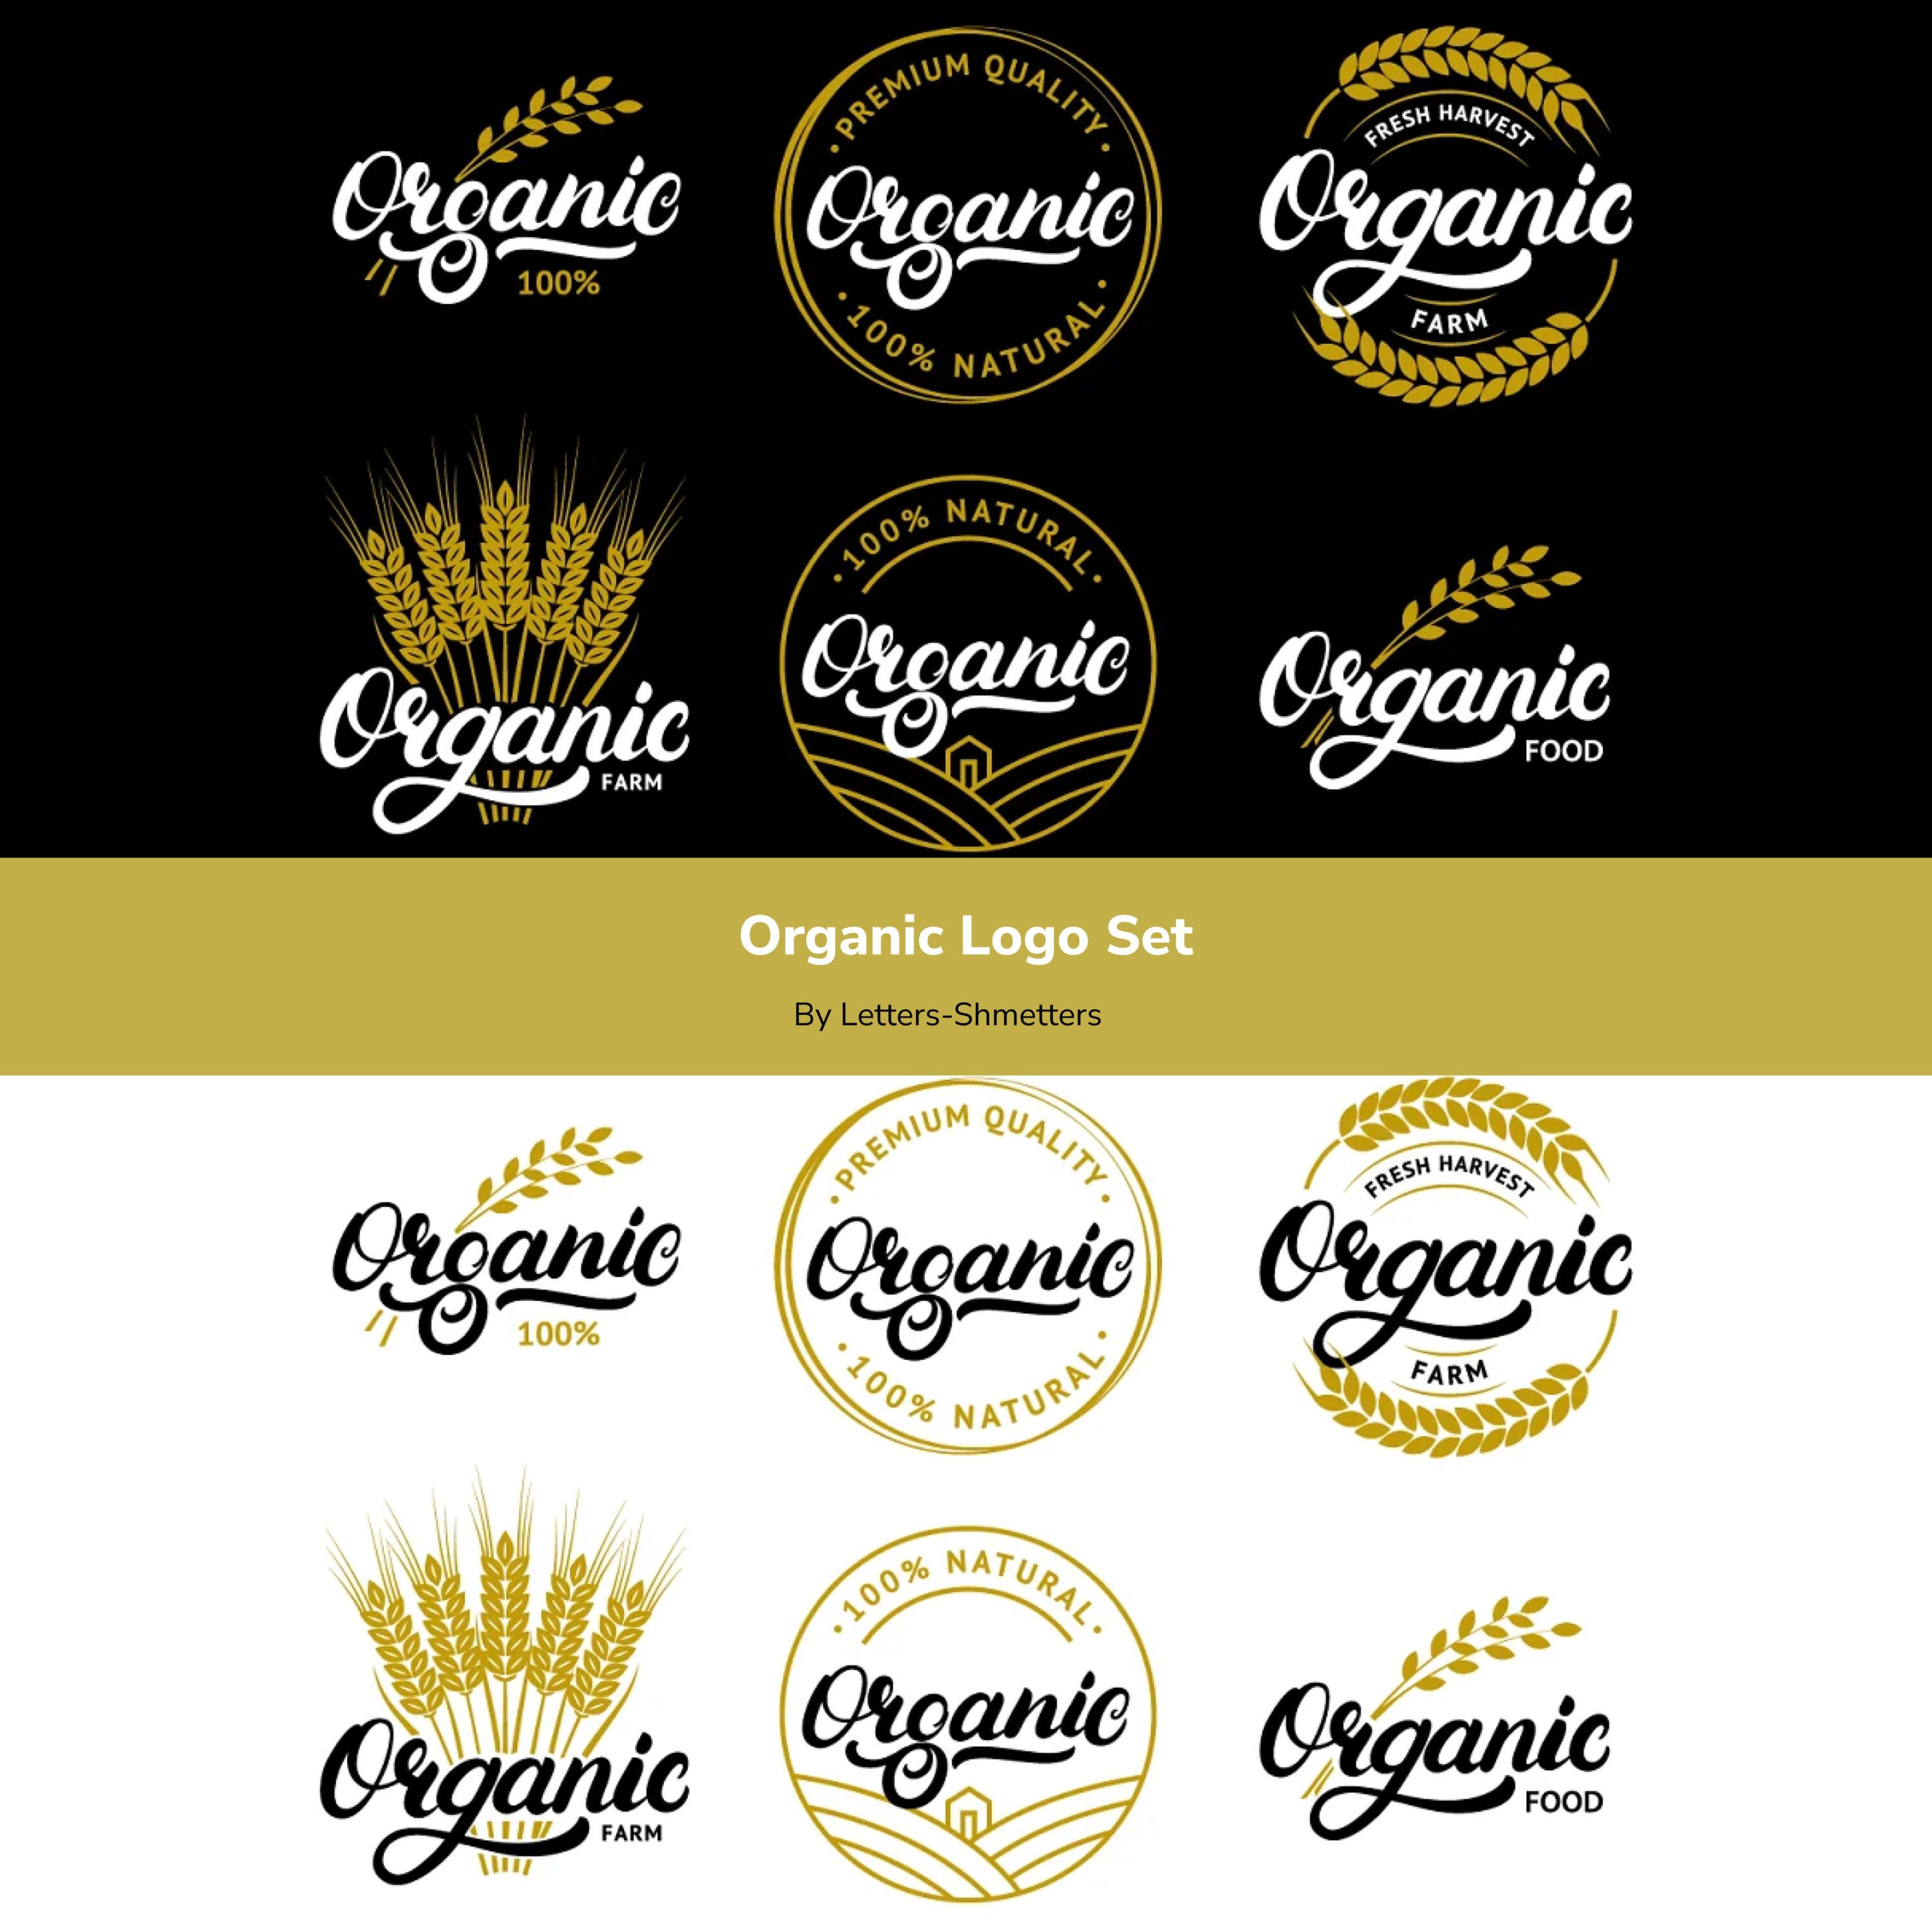 Organic Logo Set cover.